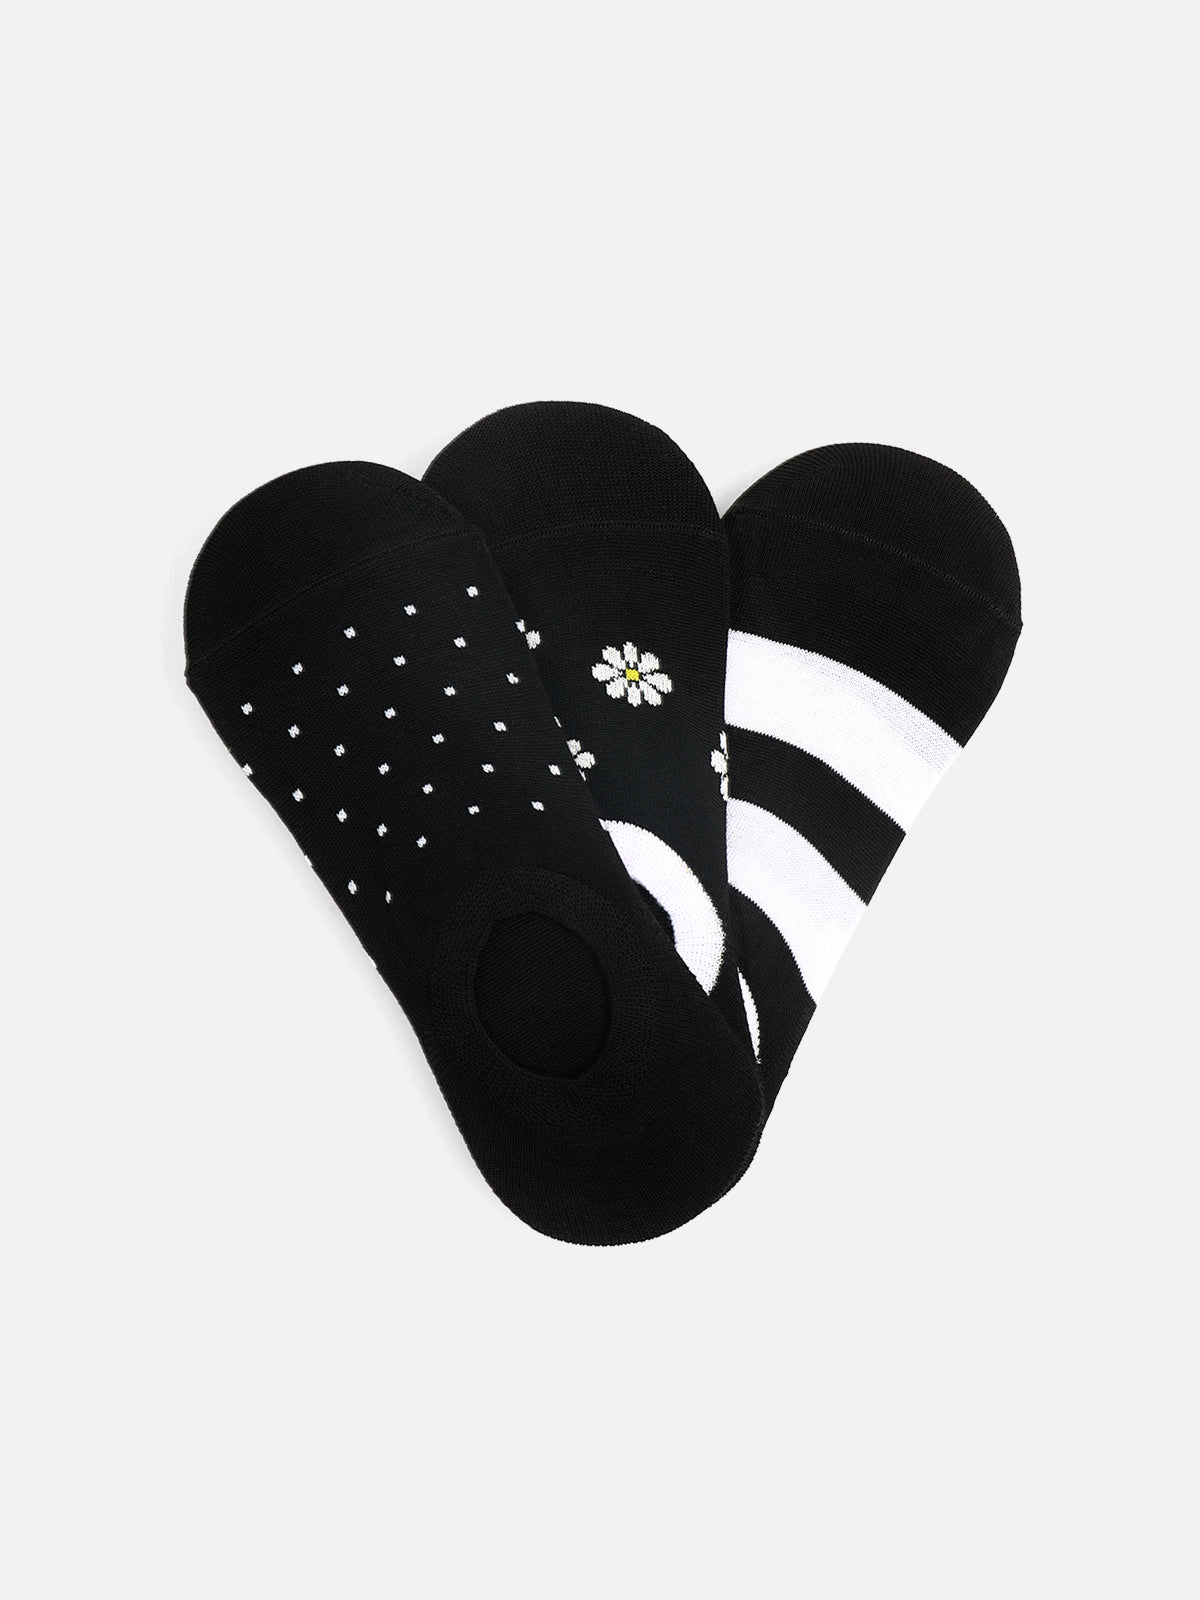 Black & White Sneaker Socks - FWAS23-015